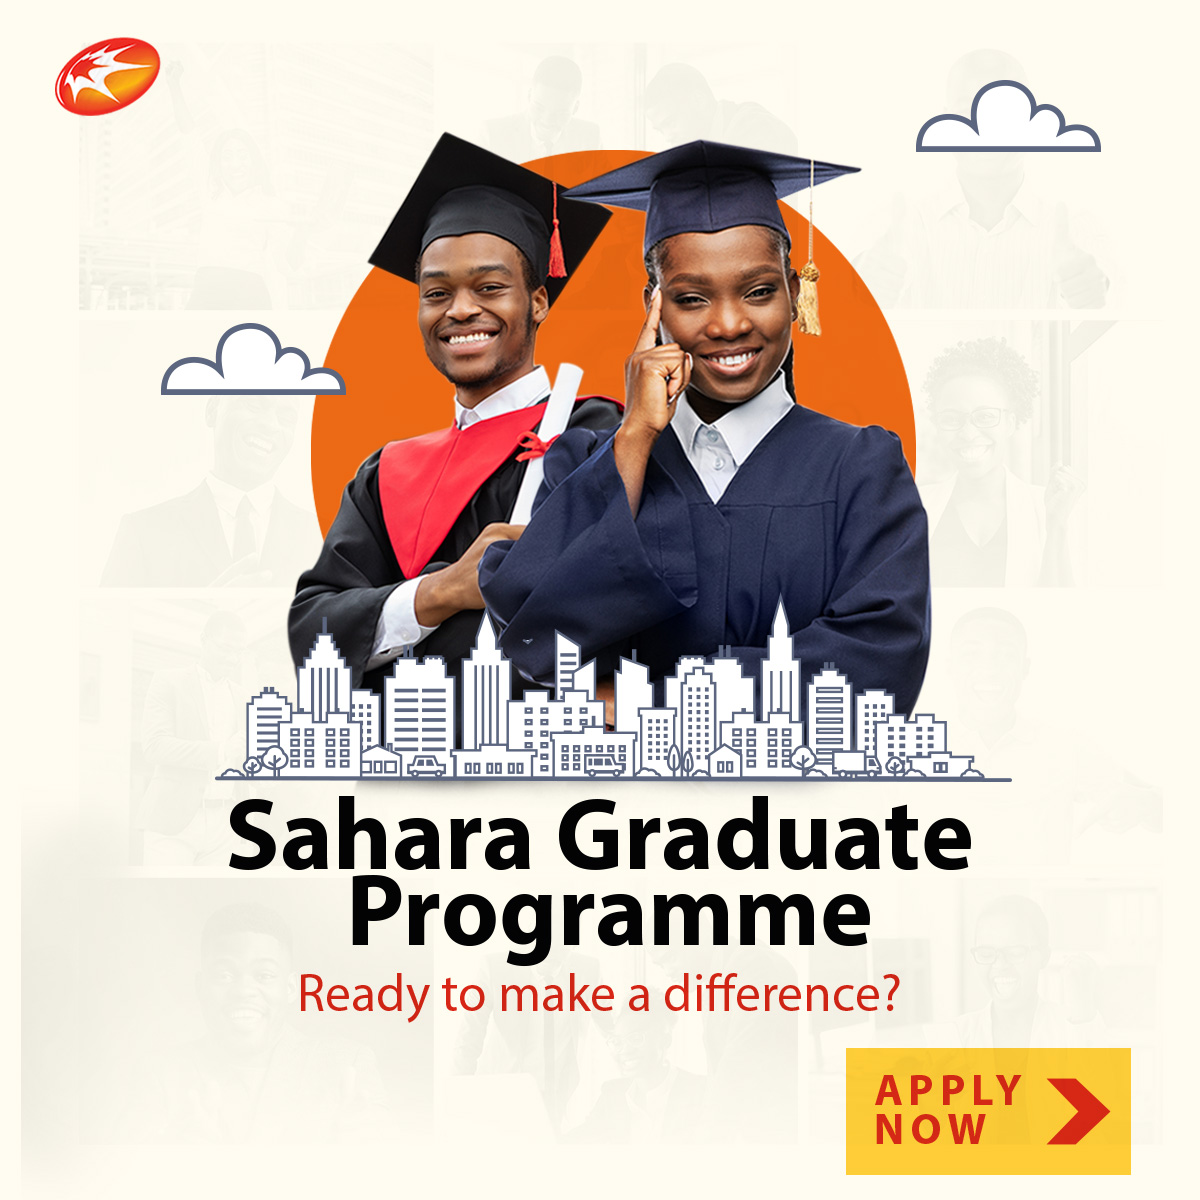 Sahara Group opens applications for 2022 graduate trainee program in Ghana